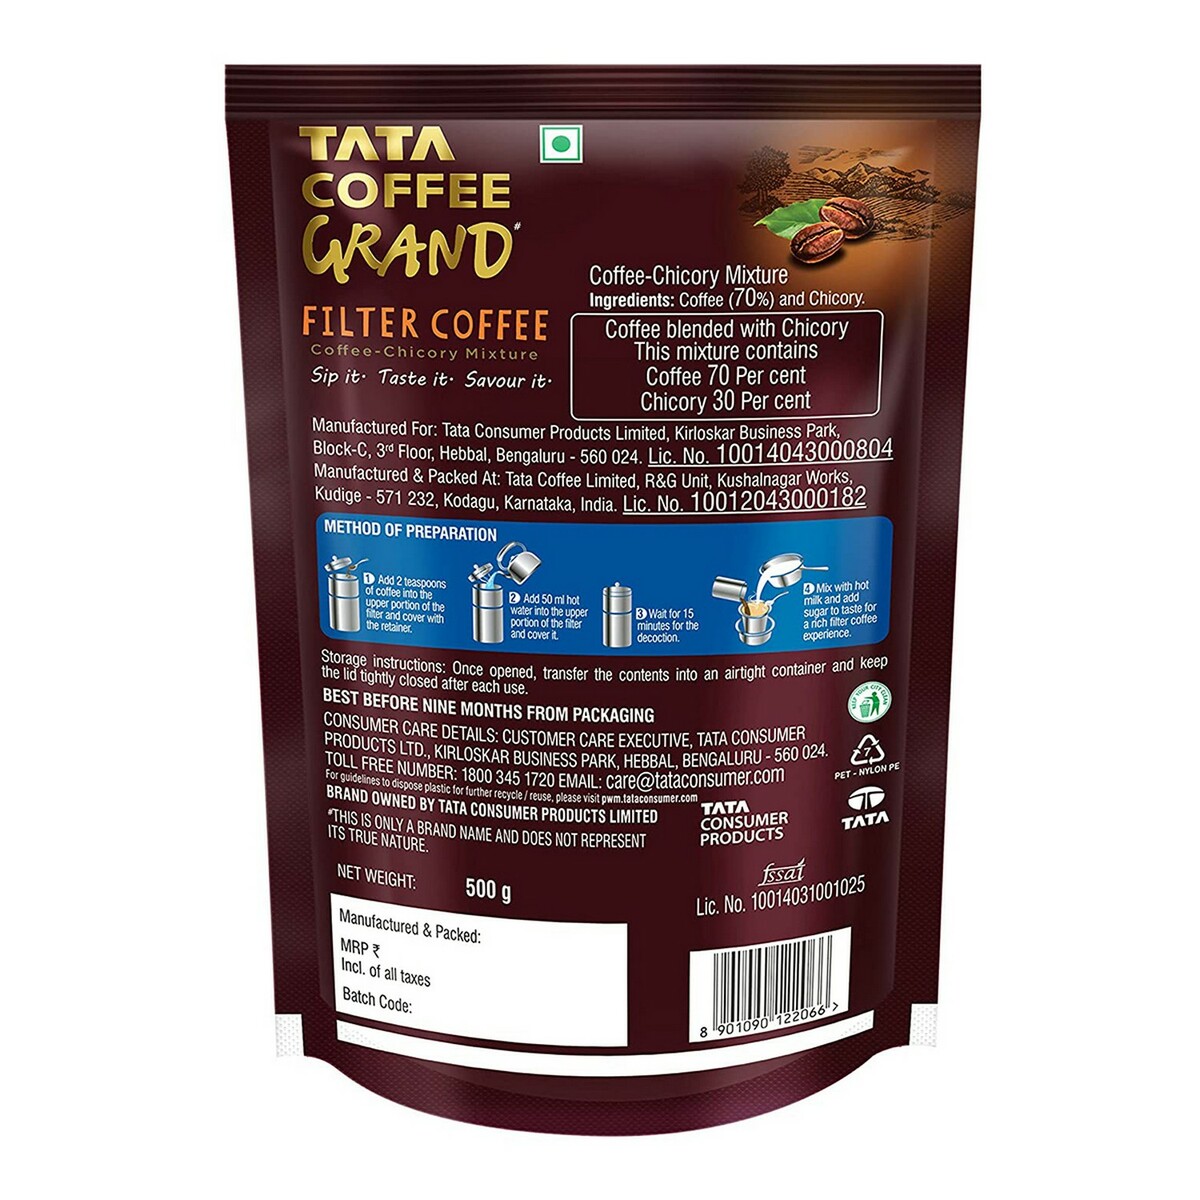 Tata Tetley Grand Filter Coffee 500g